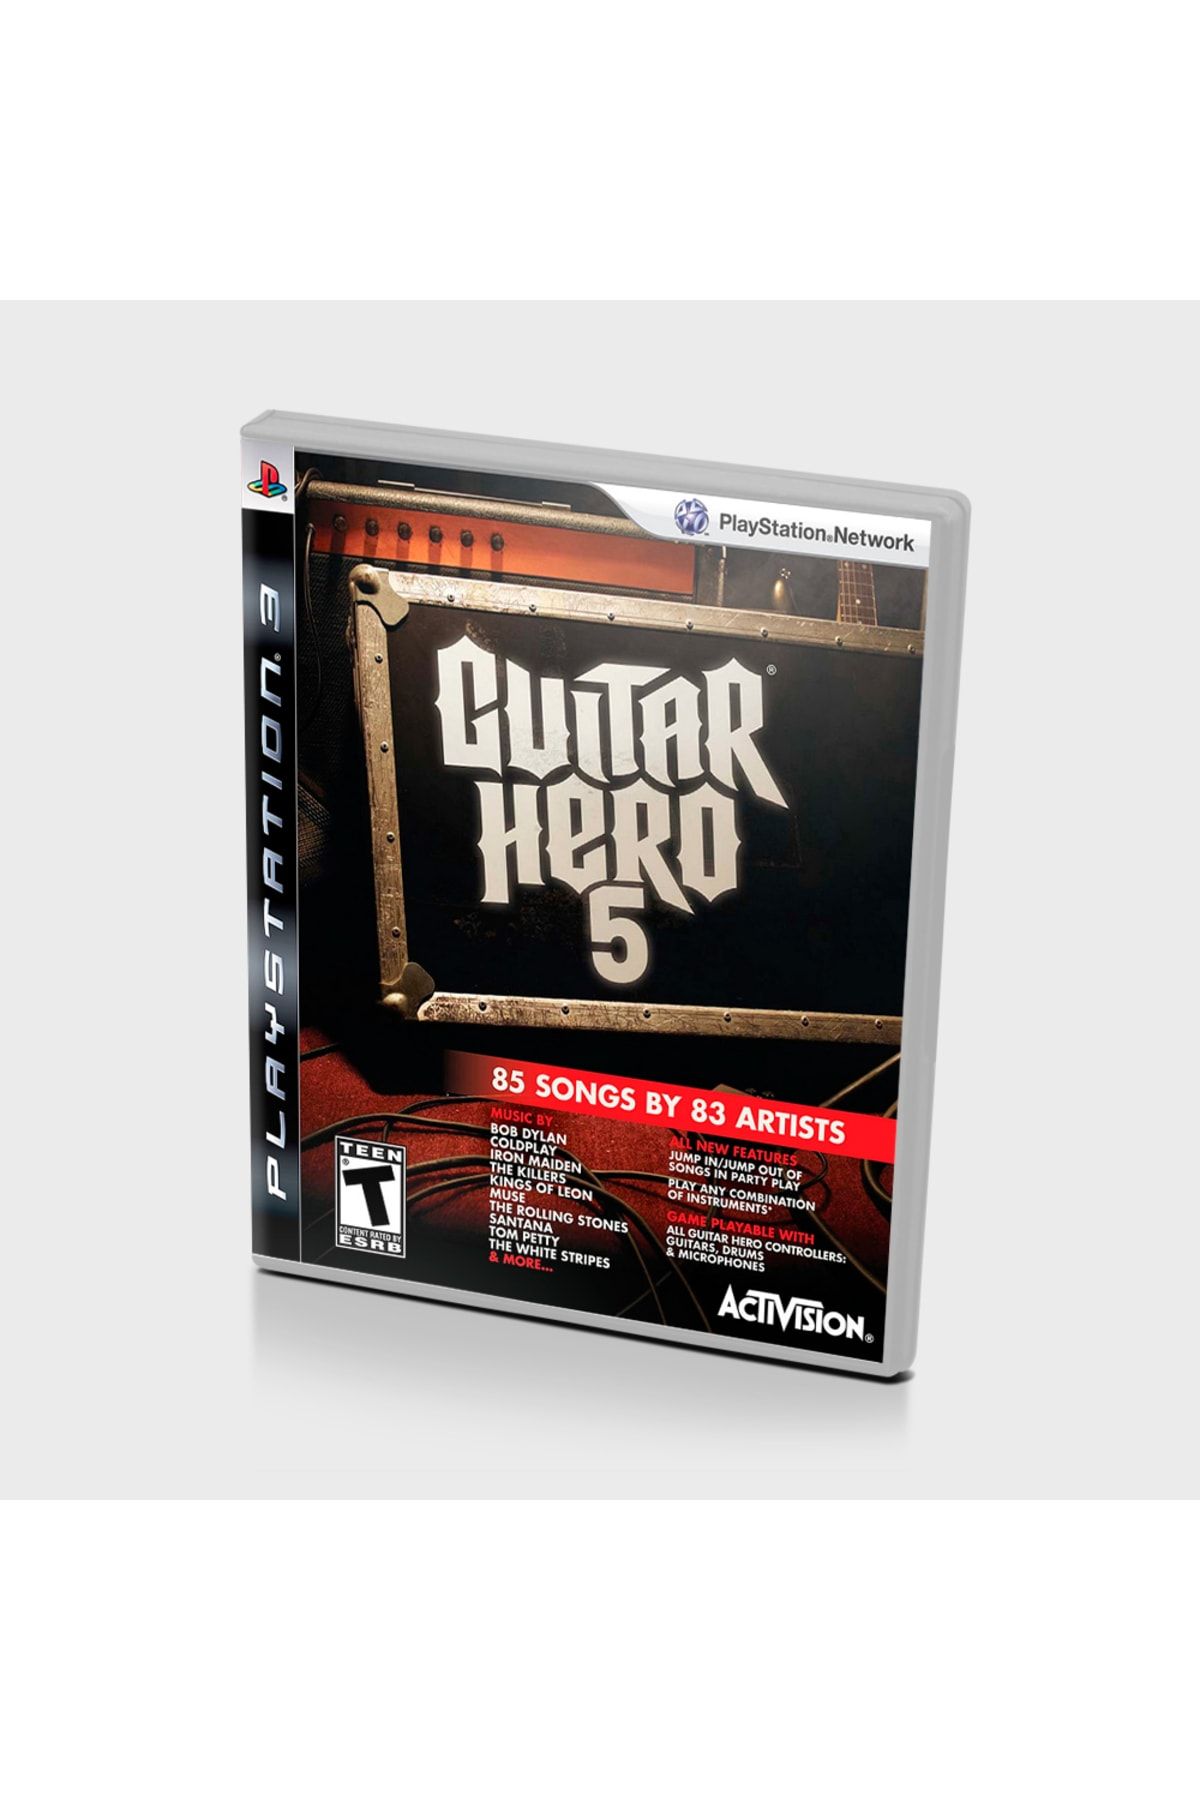 Activision Ps3 Oyun Guitar Hero 5 Oyun